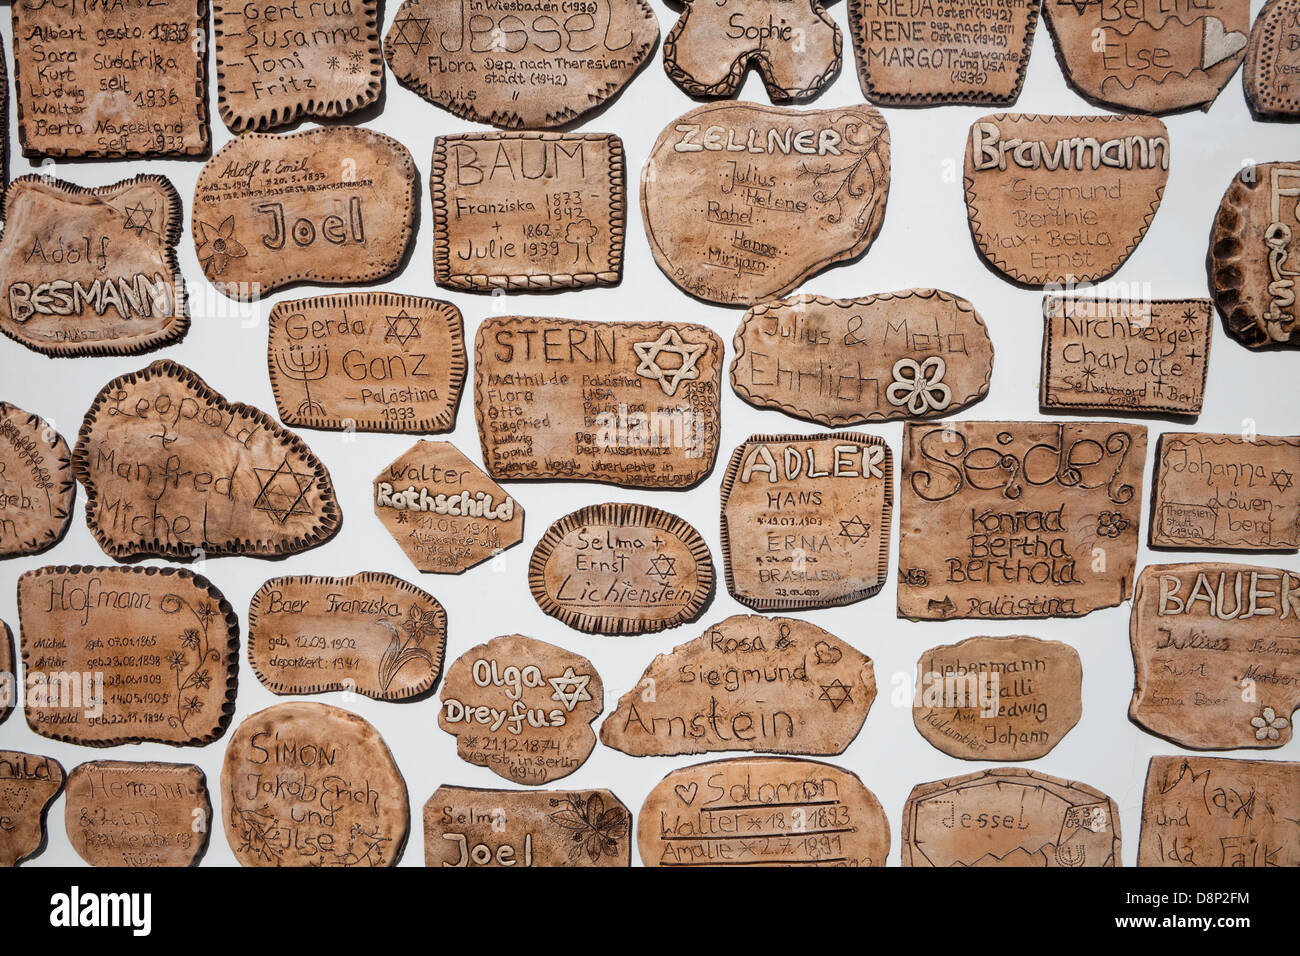 Tavolette di argilla con i nomi di ebrei di Weilburg, 1918 - 1945, Weilburg an der Lahn, Hesse, Germania, Europa Foto Stock